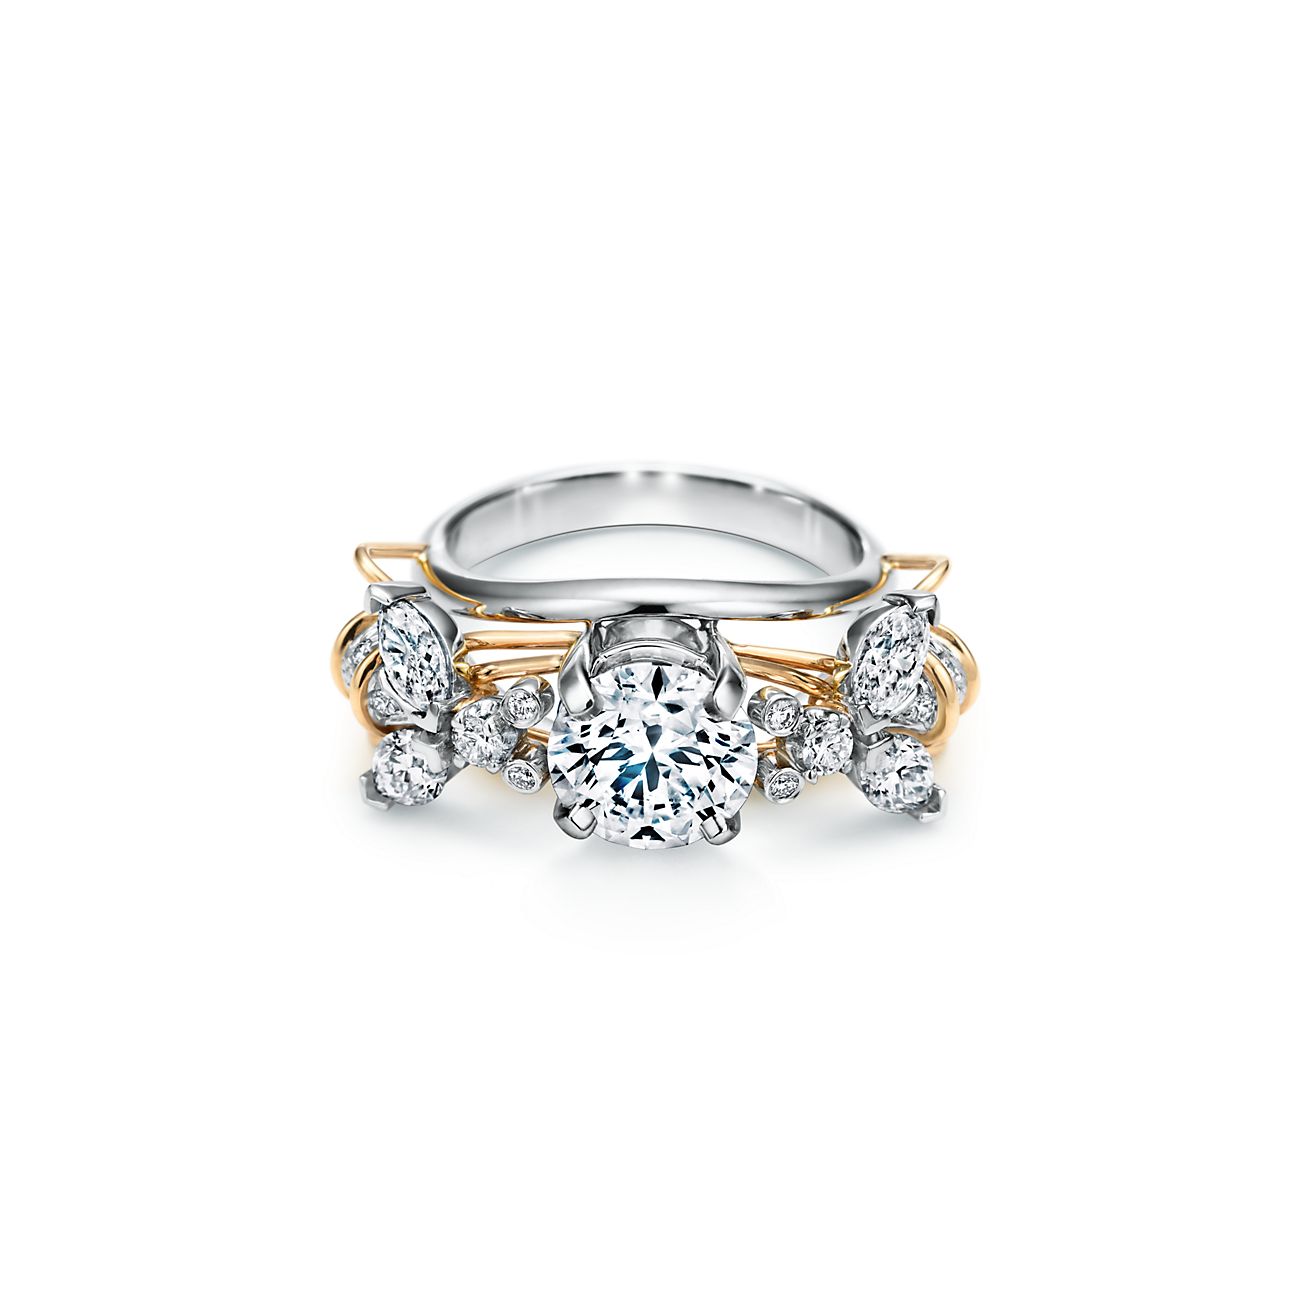 Tiffany Engagement Rings: Fantastic Ring Ideas